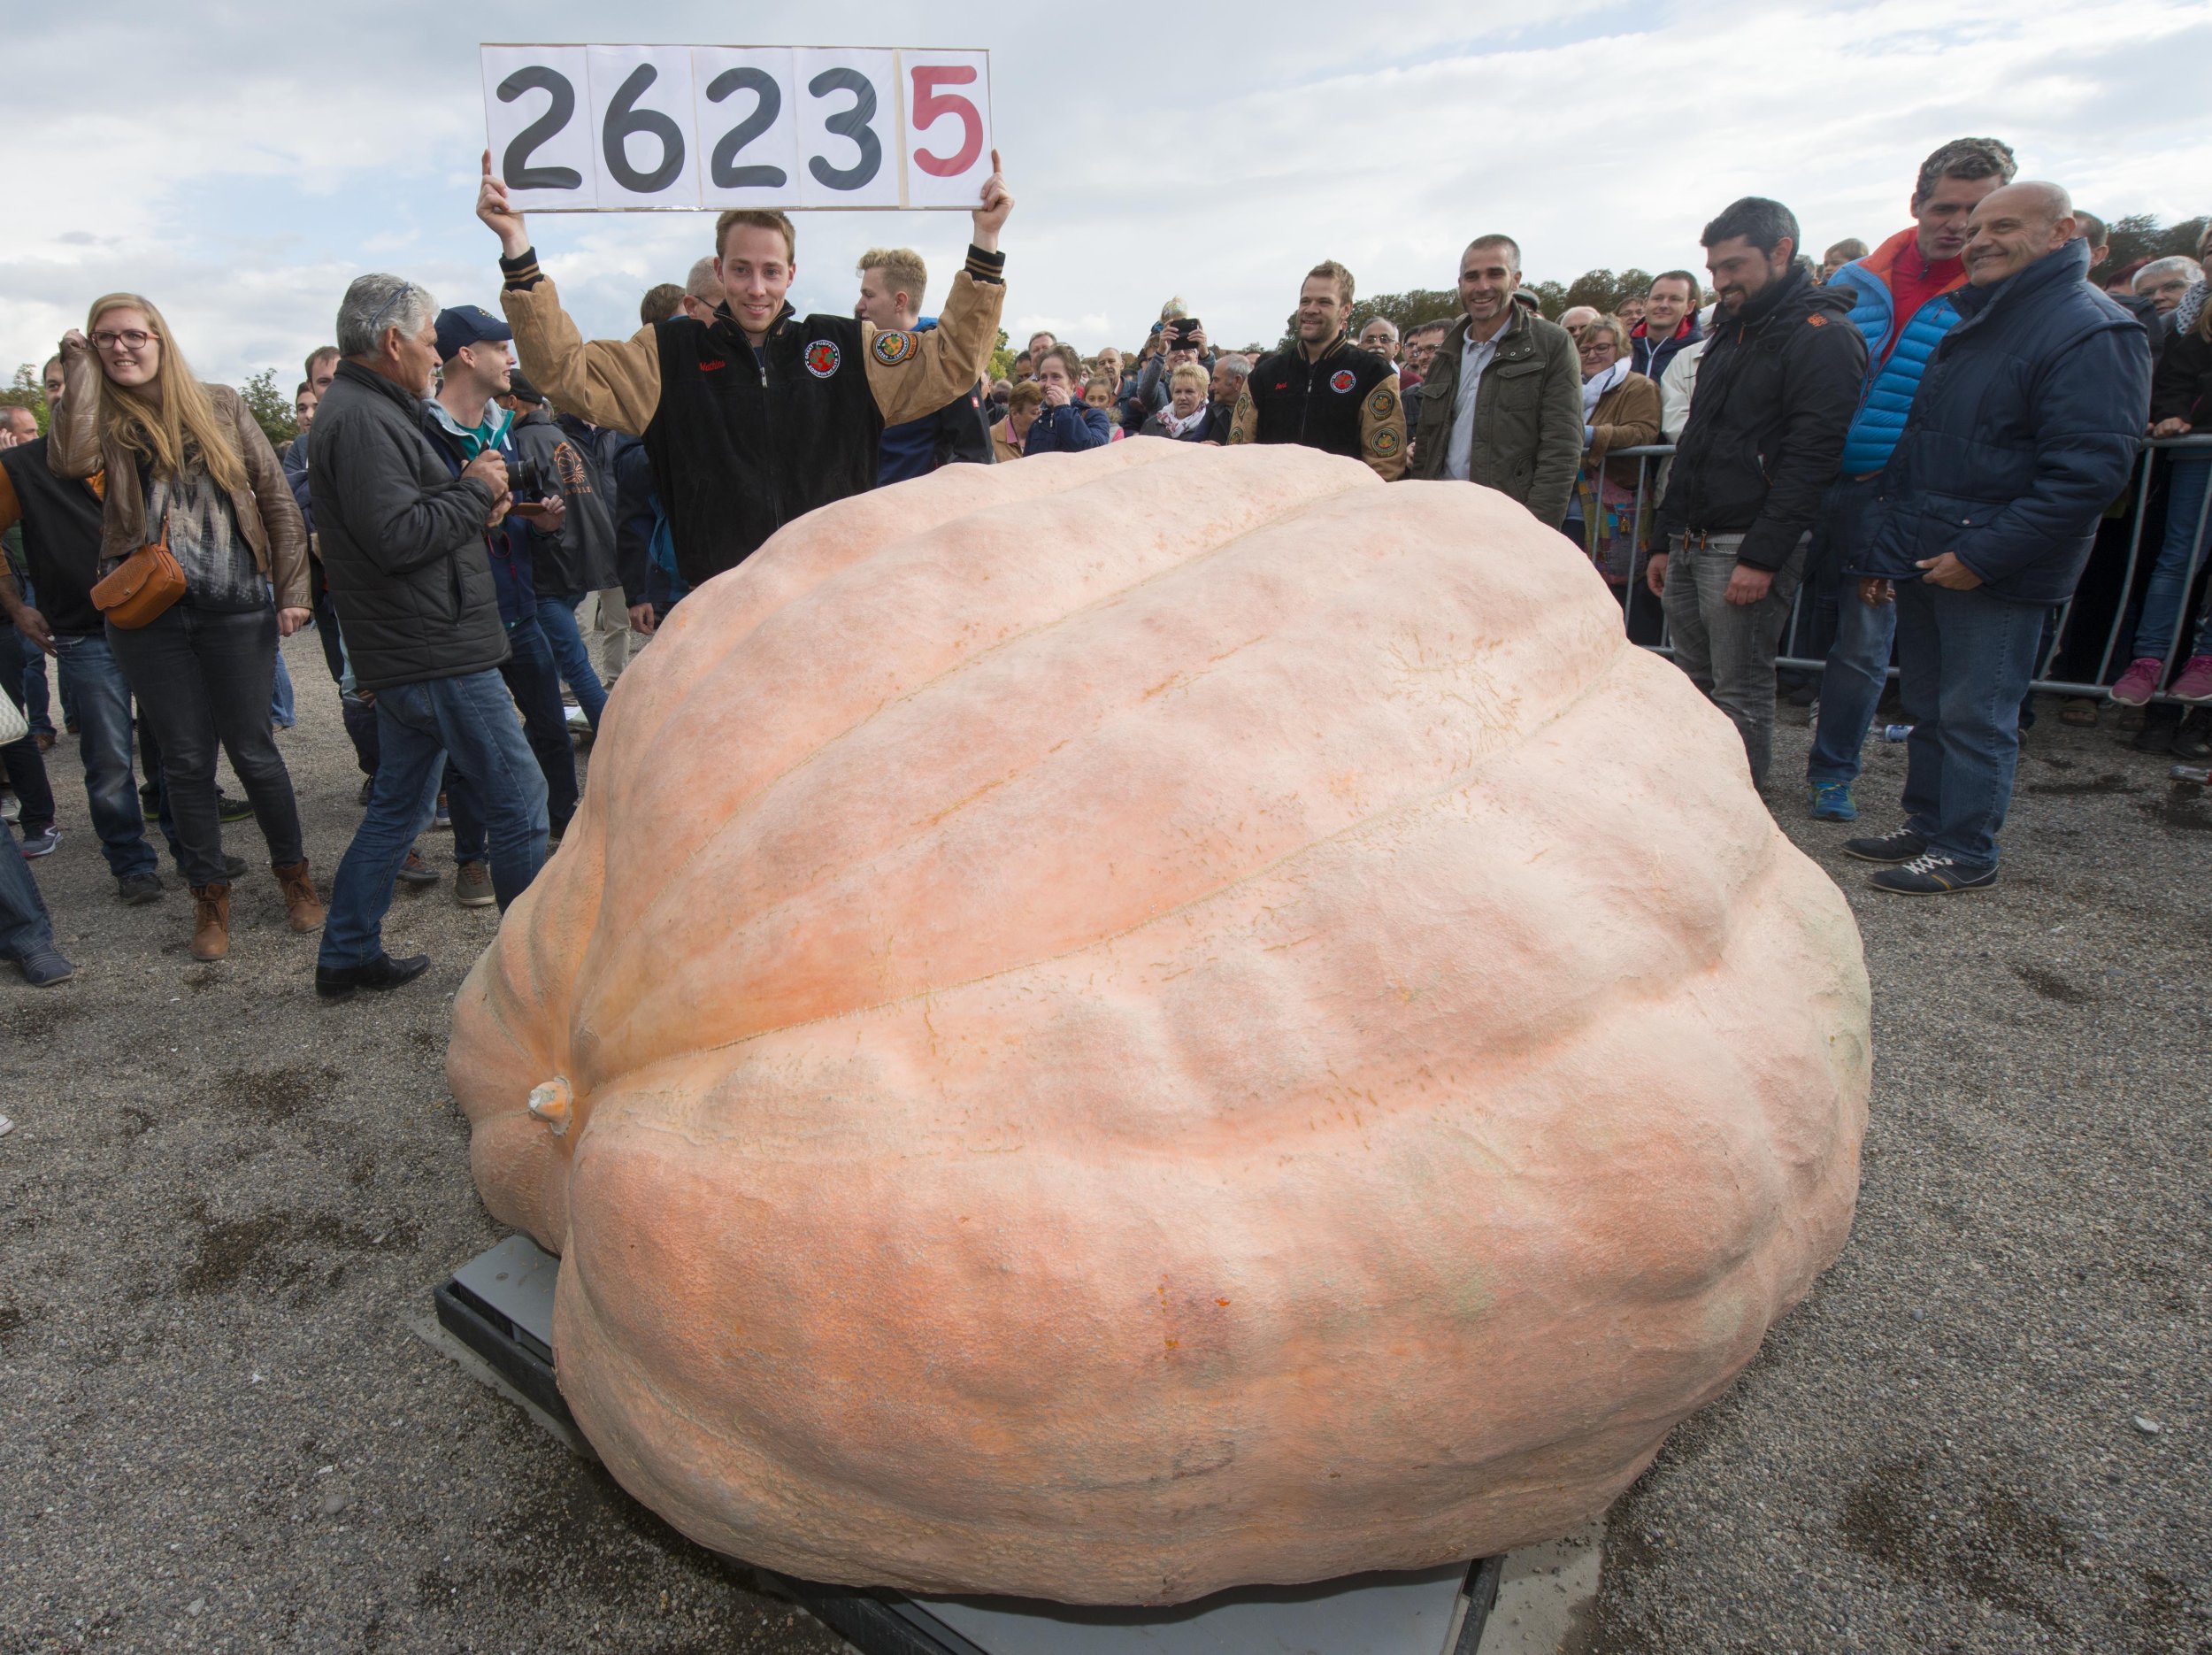 Largest Pumpkin Record 2022